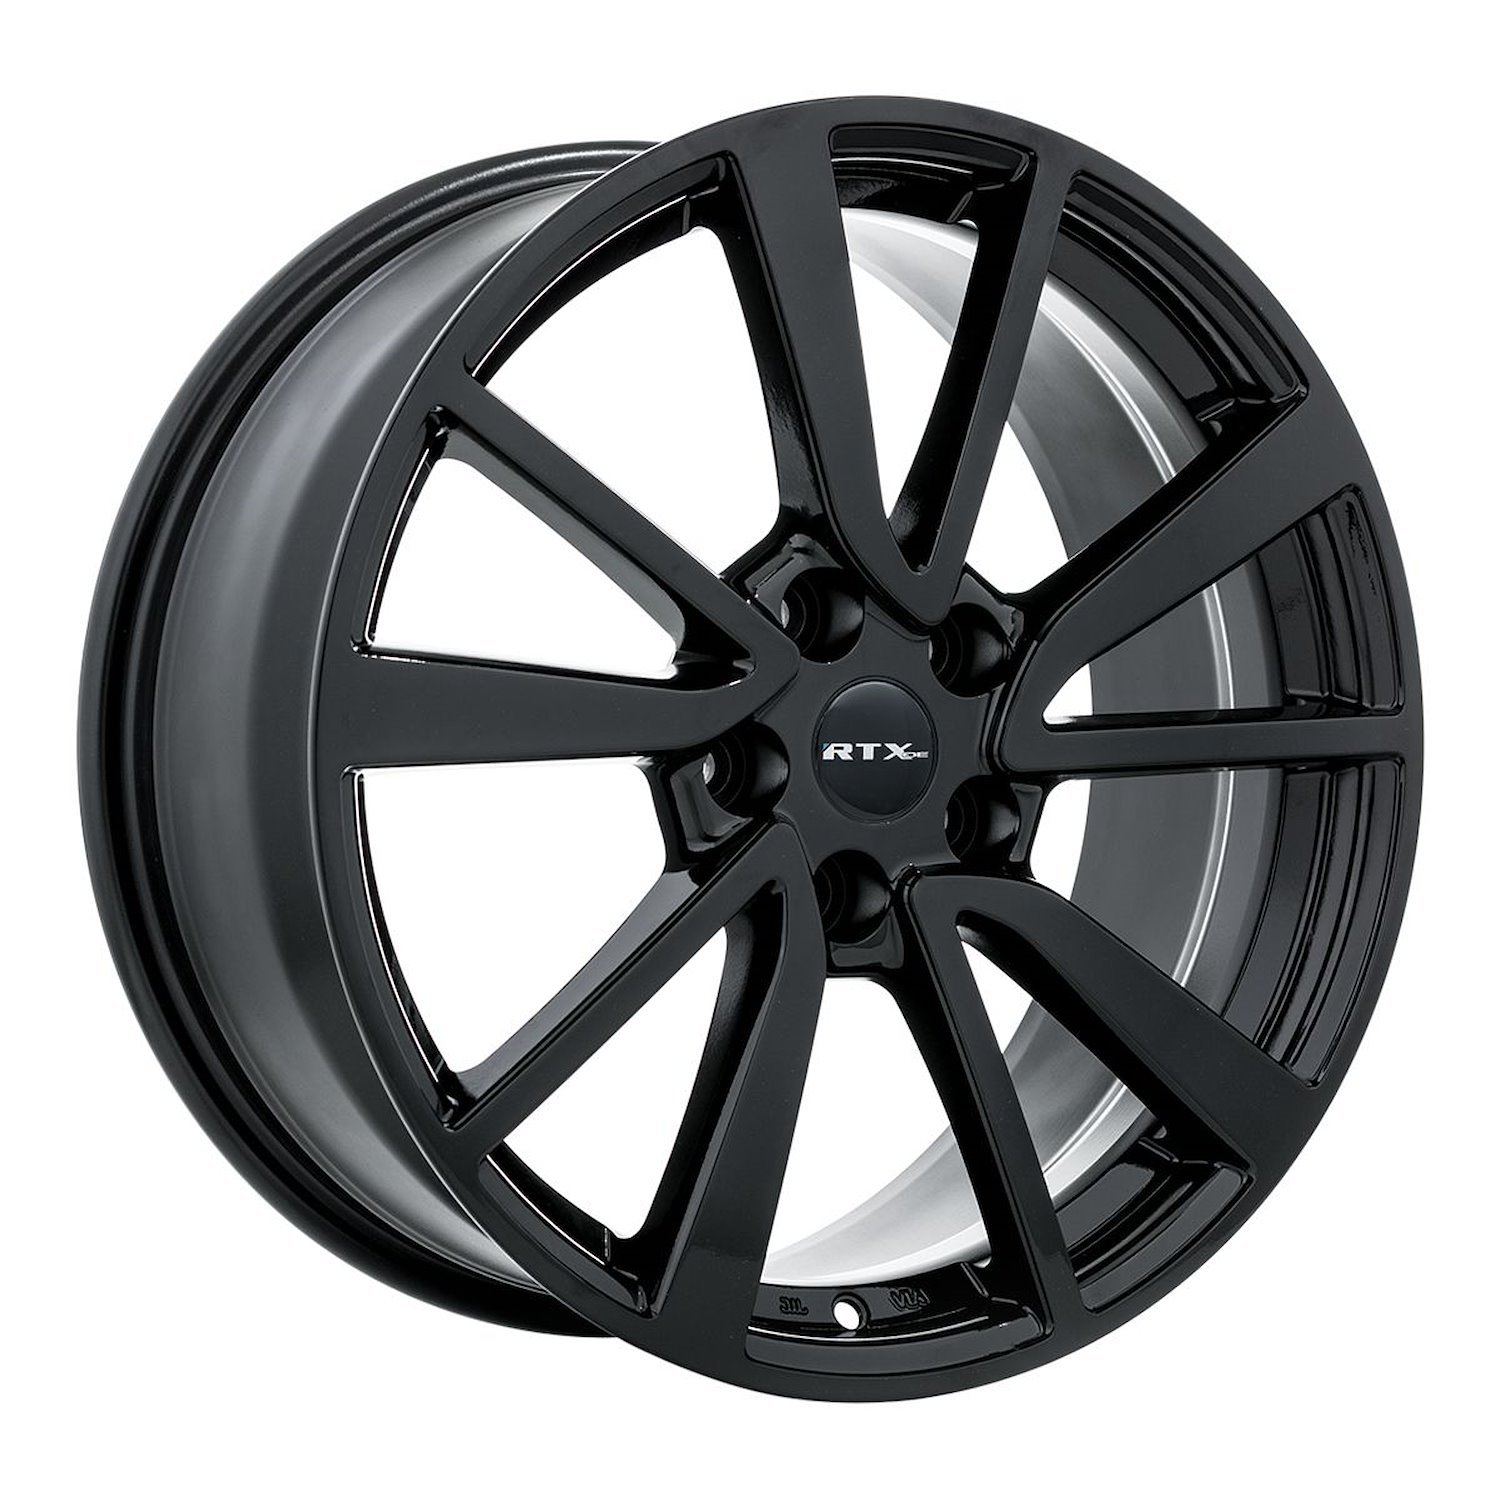 082221 OE-Series Rogue Wheel [Size: 18" x 8"] Gloss Black Finish